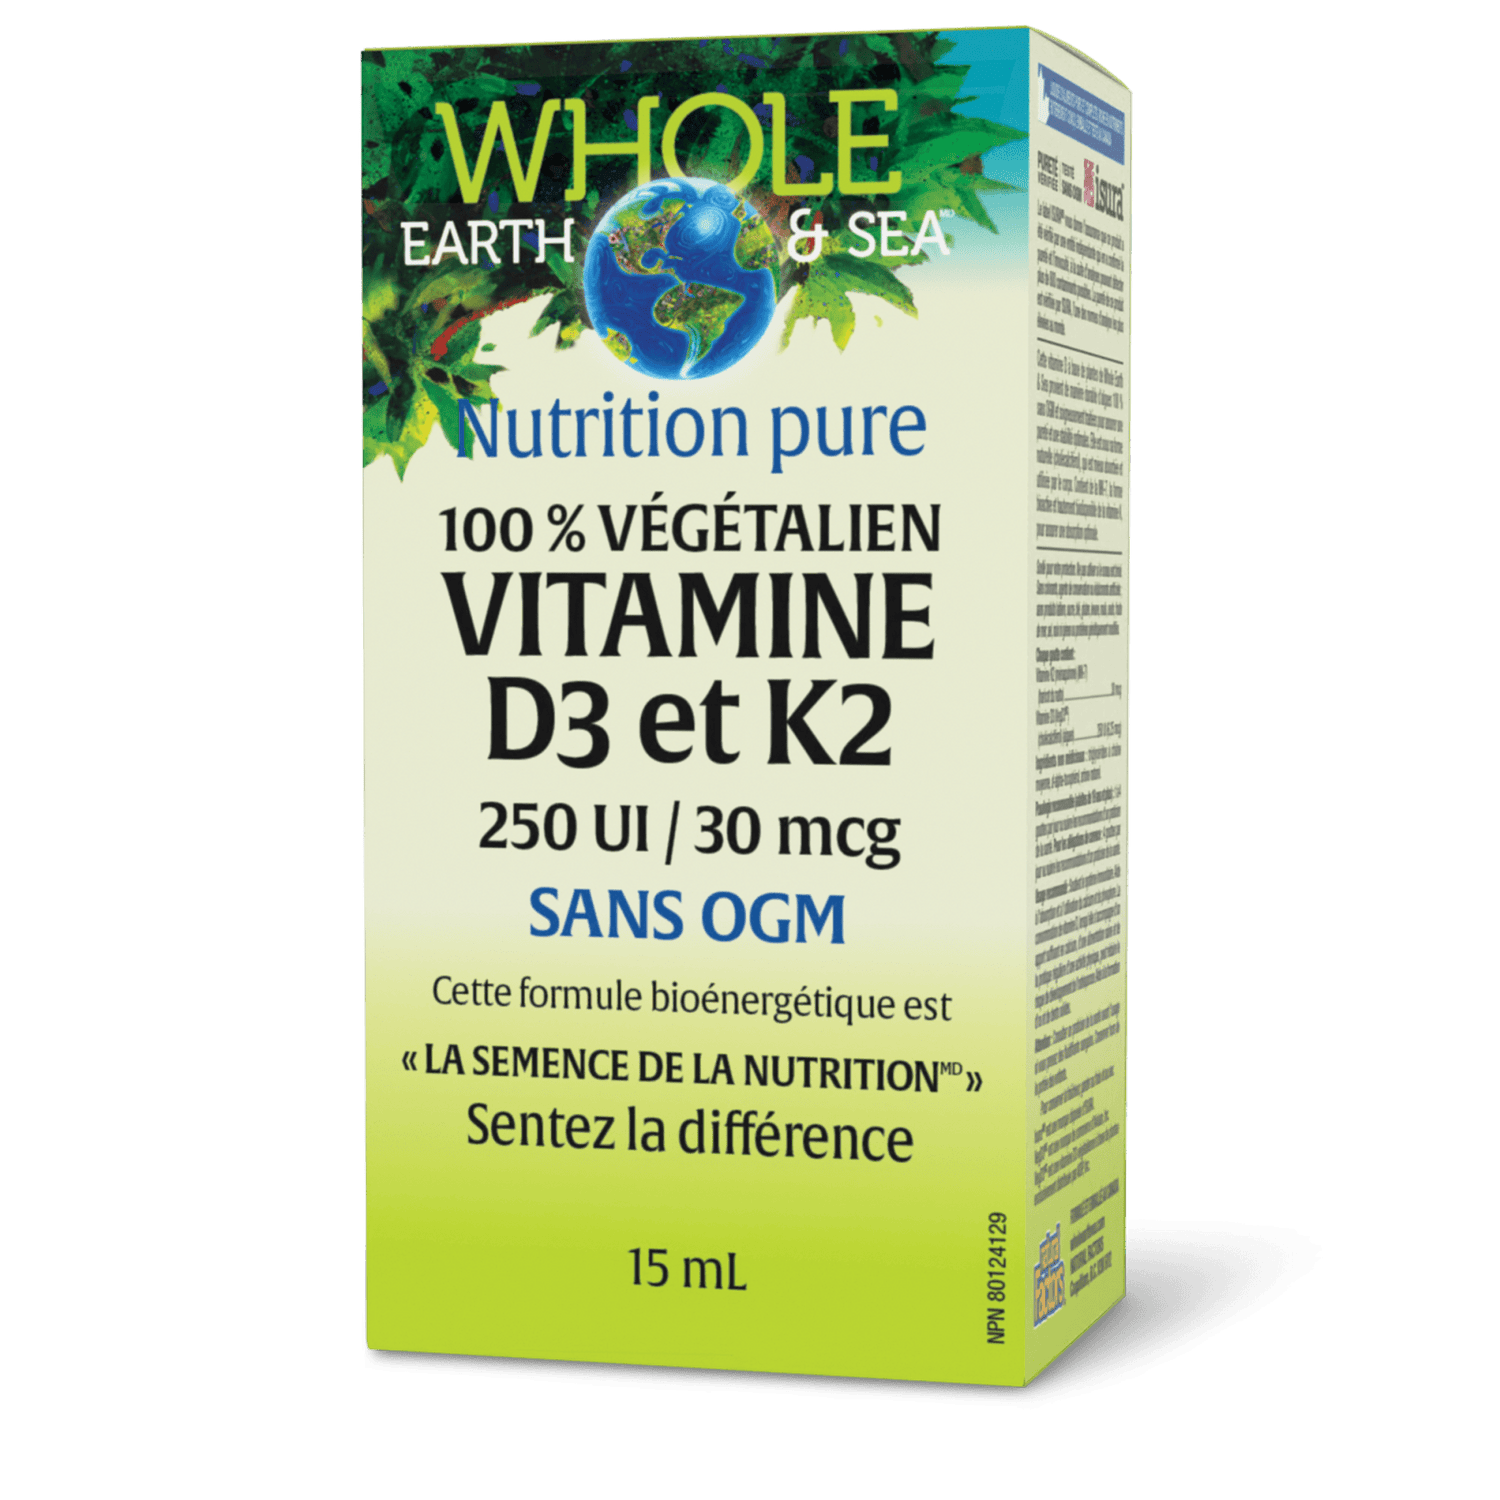 Vitamine D3 et K2, 100 % végétalien, Whole Earth & Sea, Whole Earth & Sea®|v|image|35747